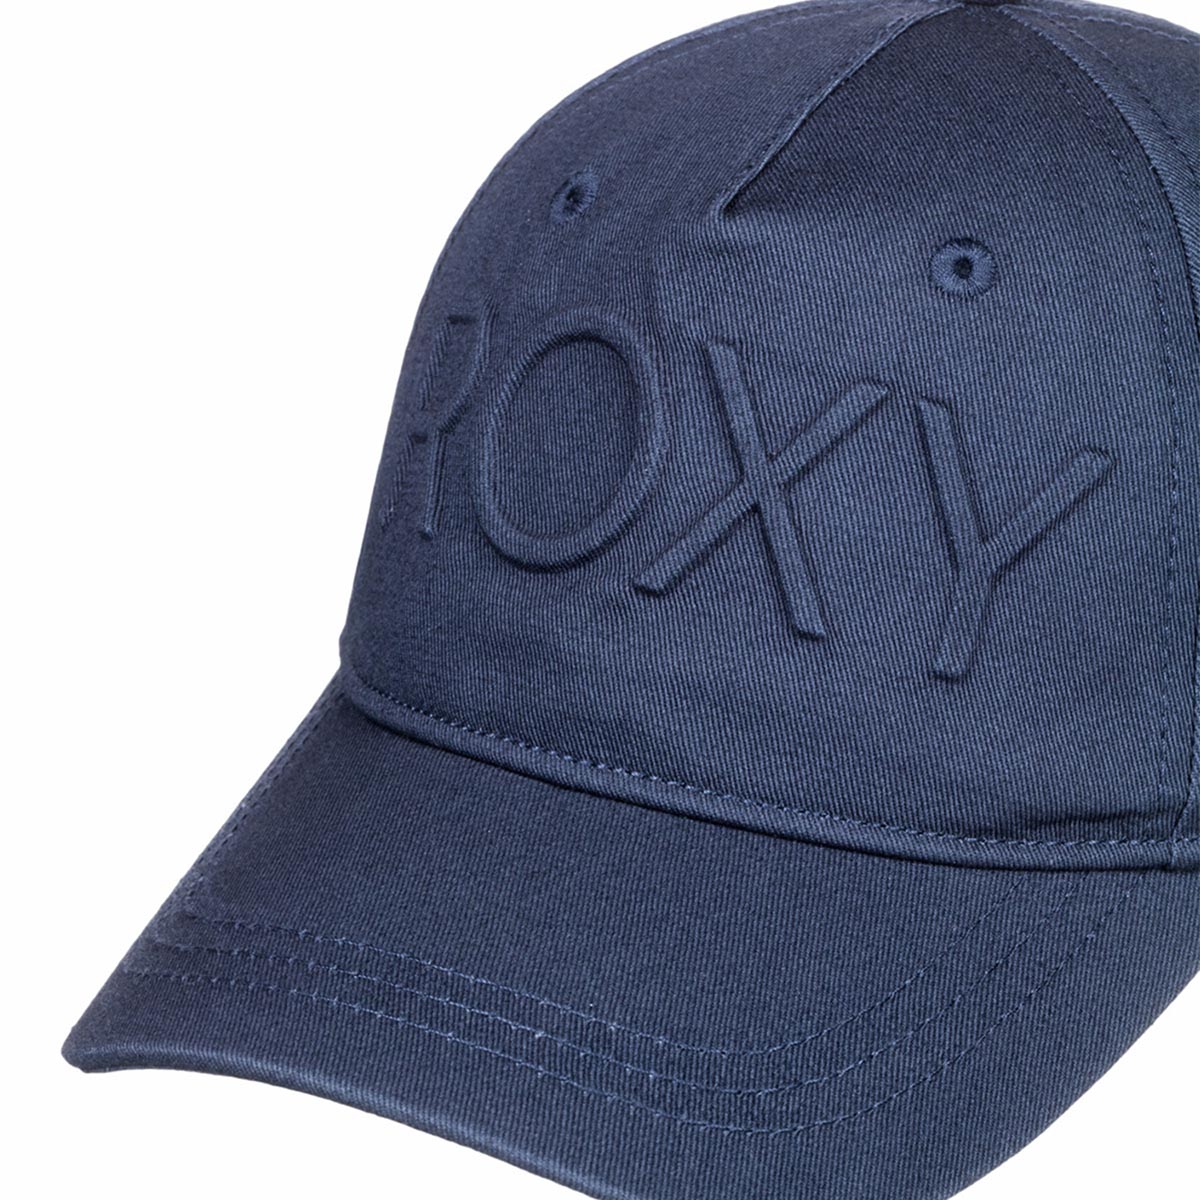 ROXY - CALIFORNIA STAR BASEBALL CAP